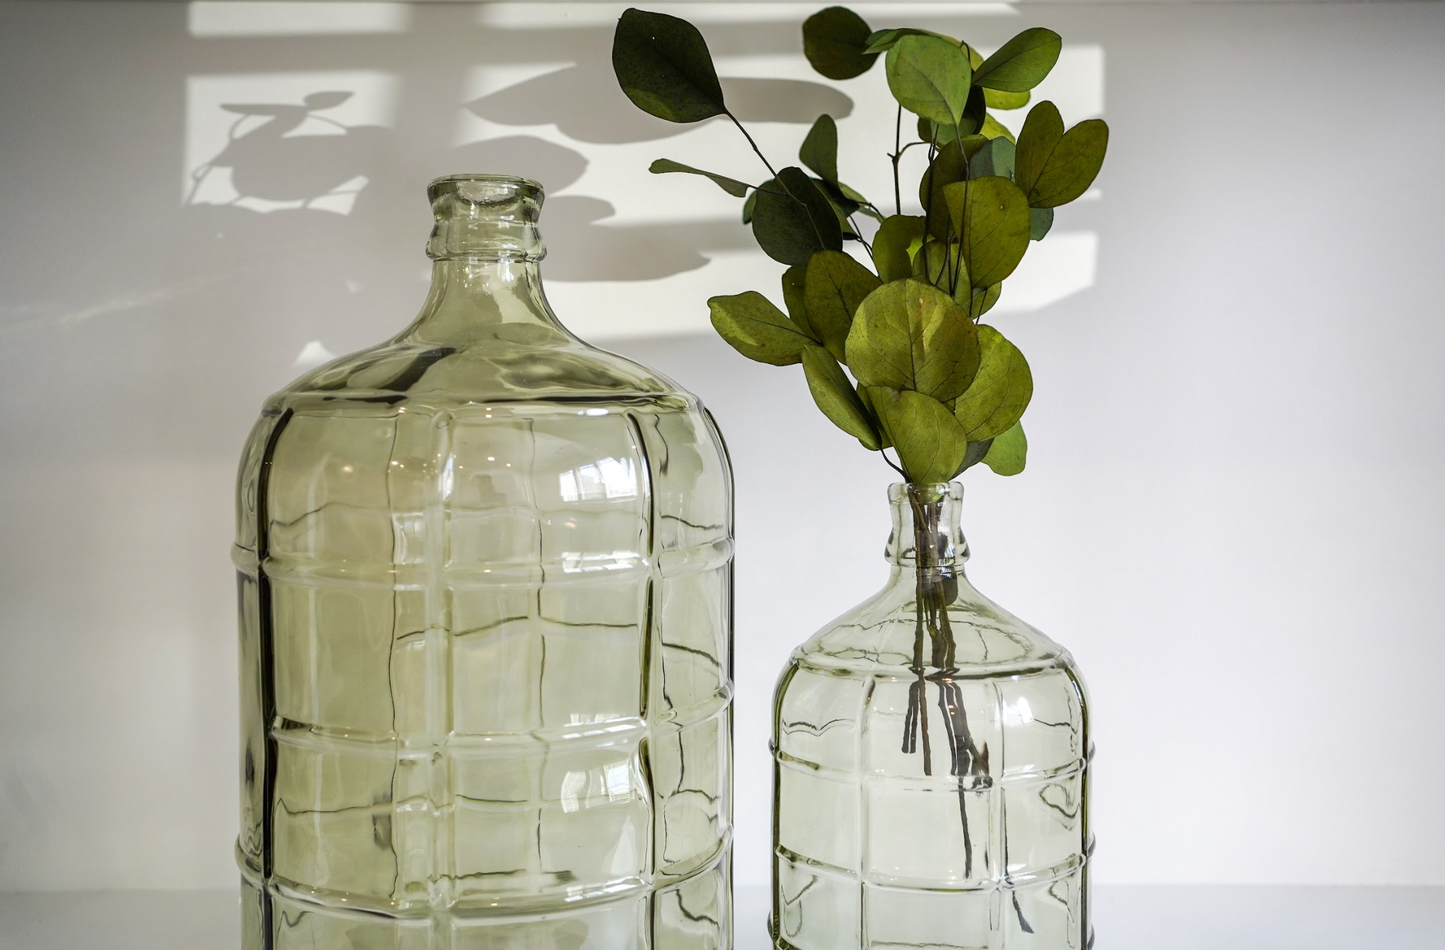 The Essential Glass vase